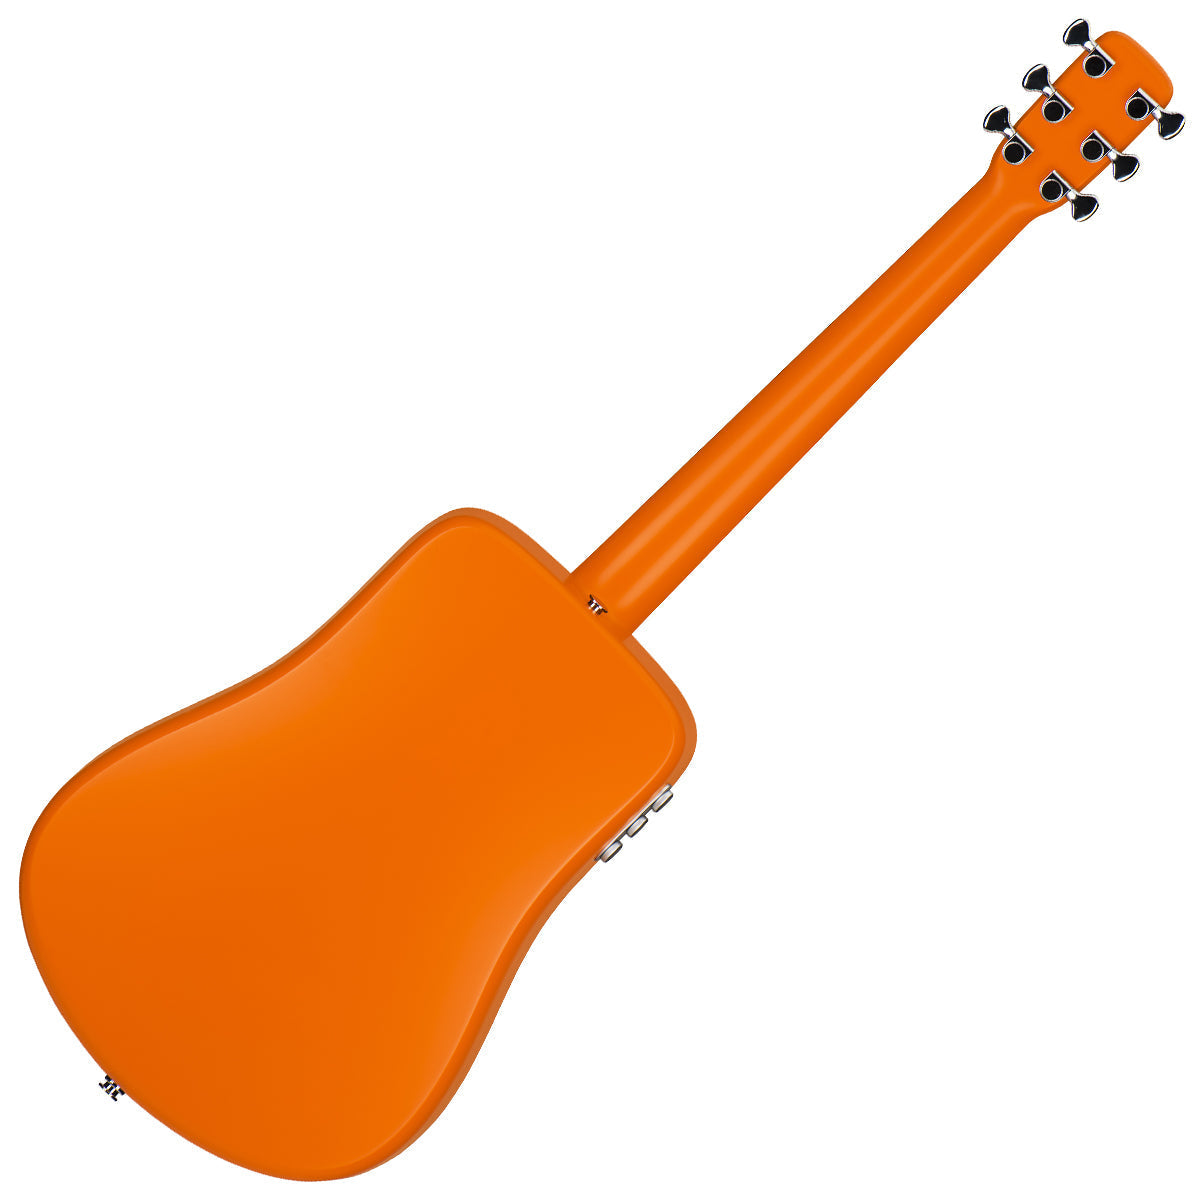 LAVA ME 2 FreeBoost ~ Orange, Acoustic Guitar for sale at Richards Guitars.